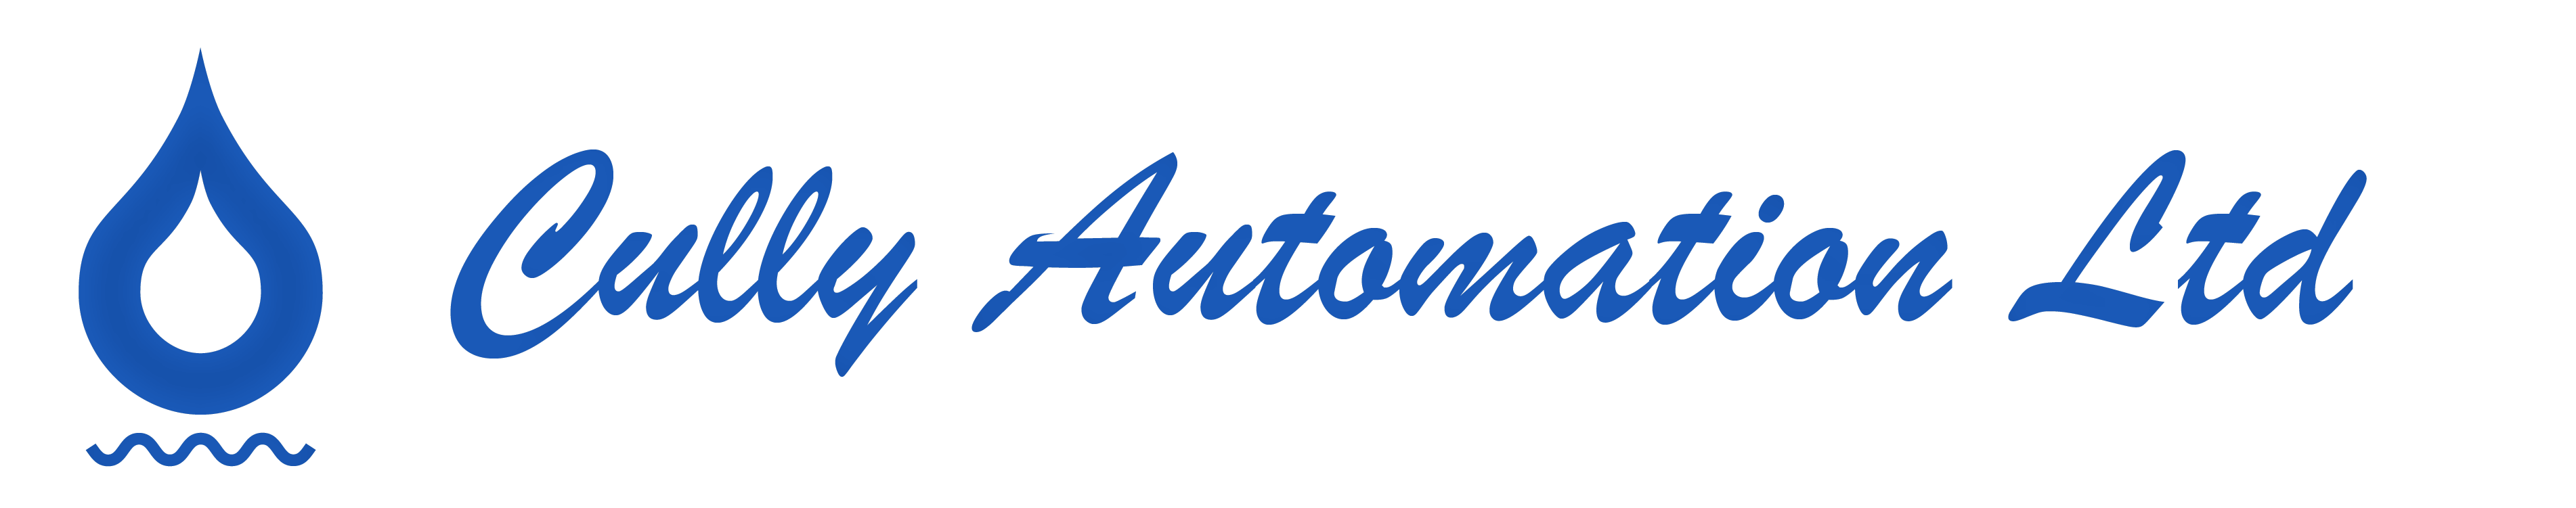 Cully Automation Ltd のロゴ